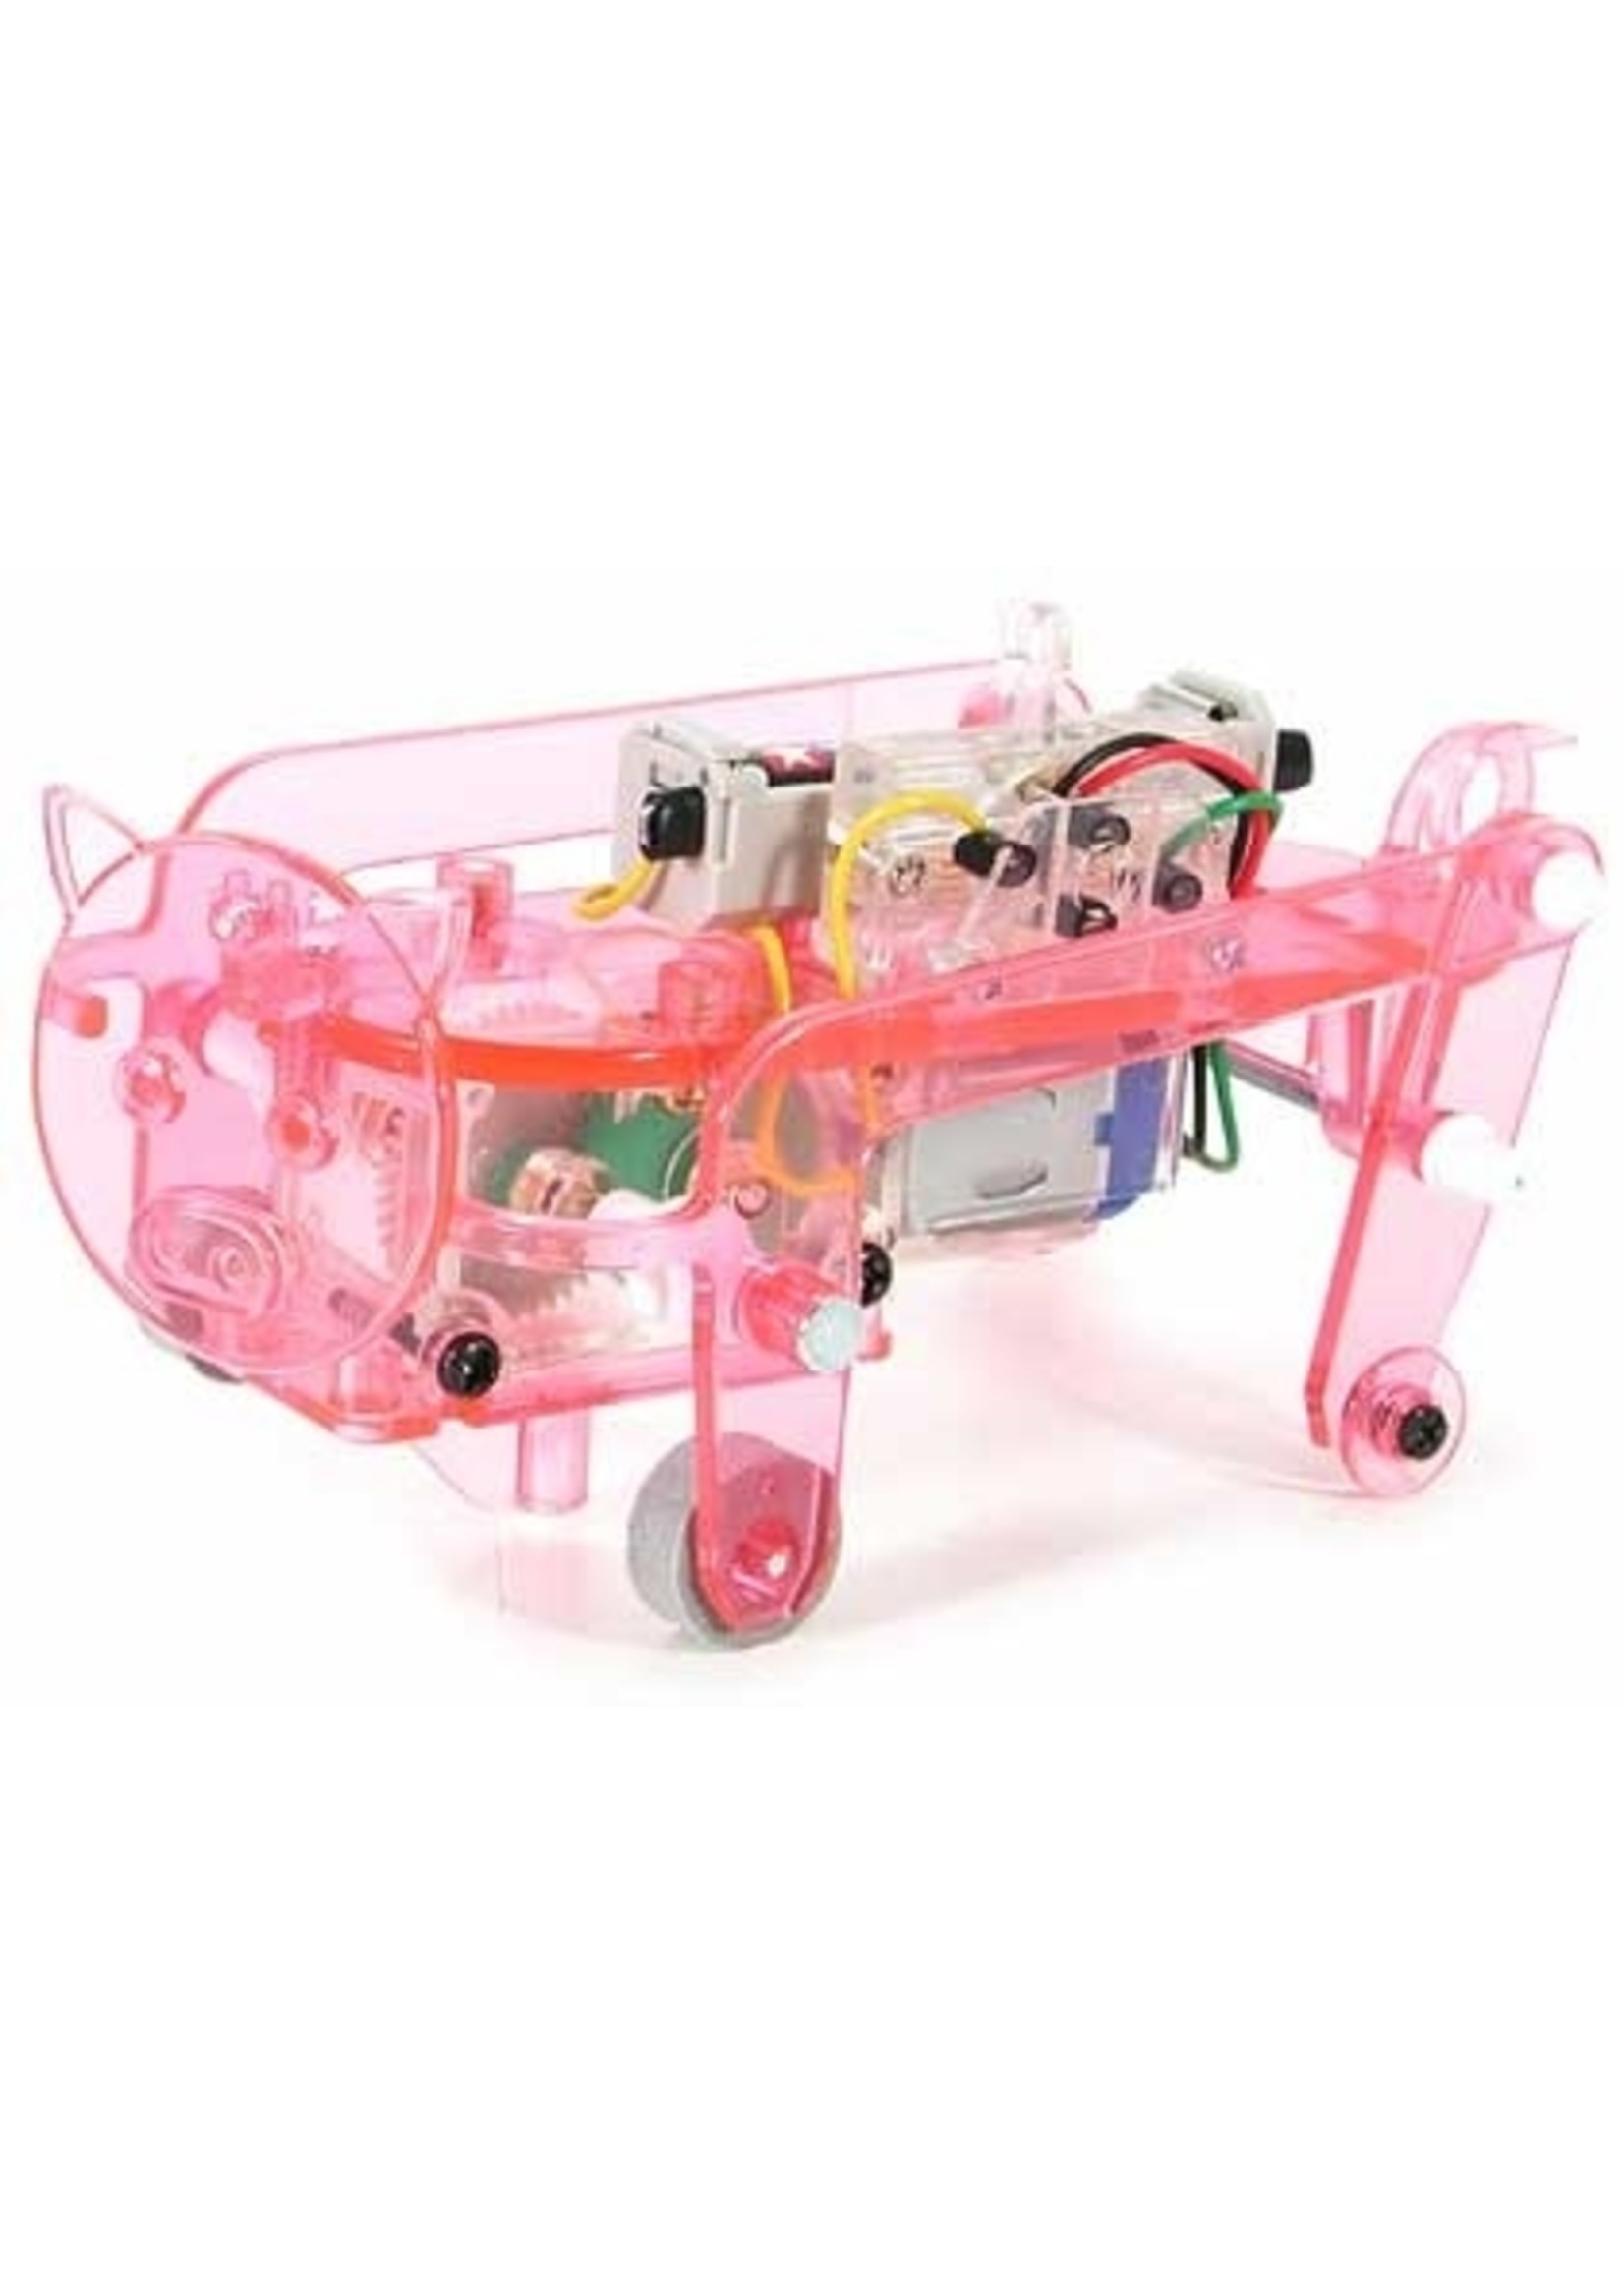 RoboCraft Mechanical Pig